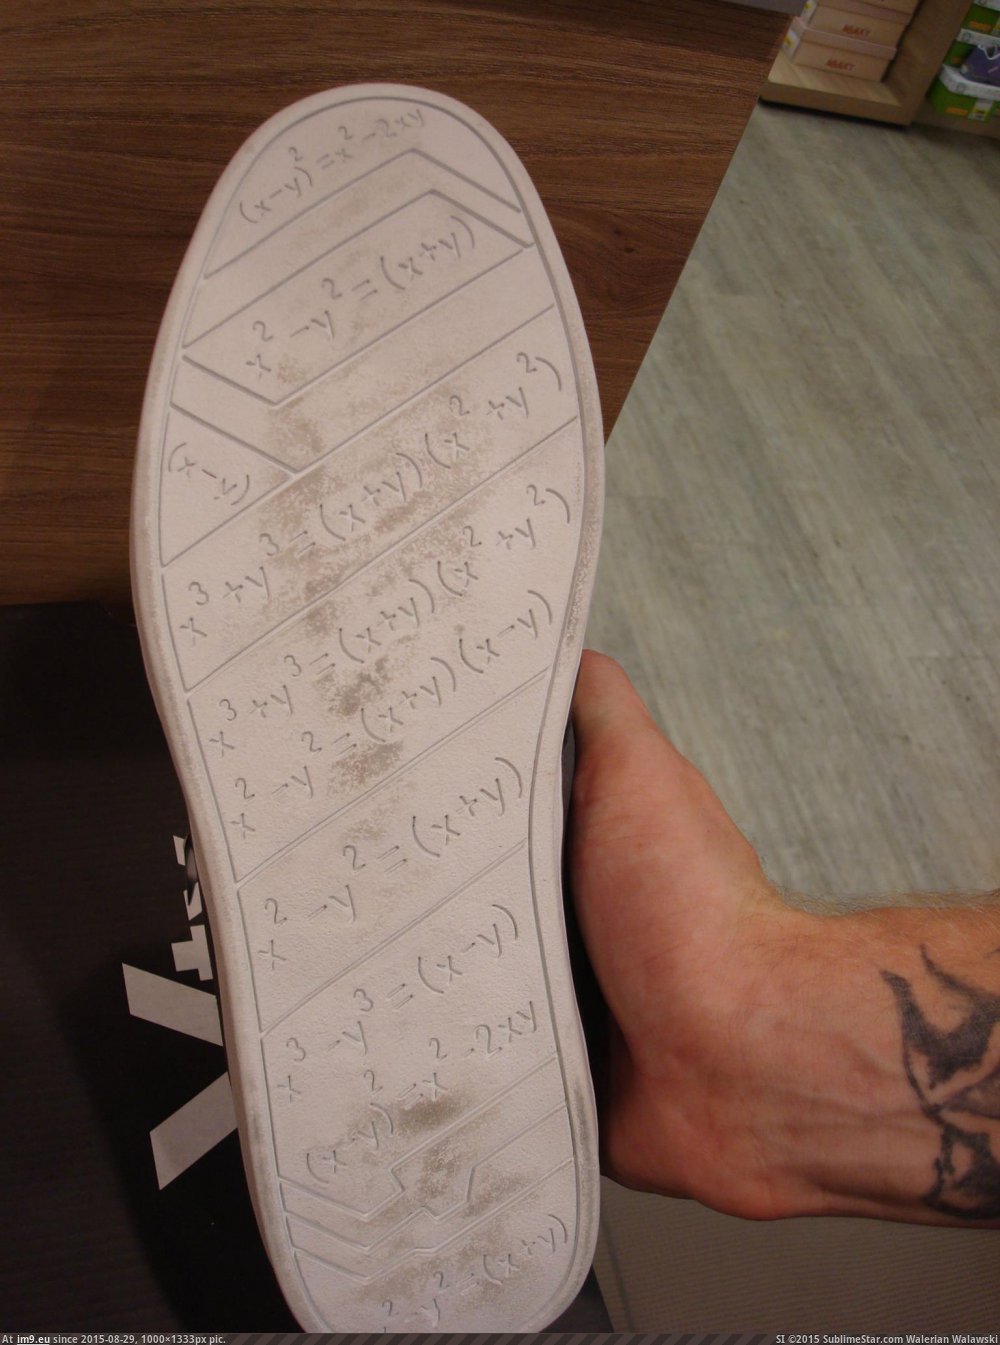 [Mildlyinteresting] This shoe sole has math equations written below it (in My r/MILDLYINTERESTING favs)